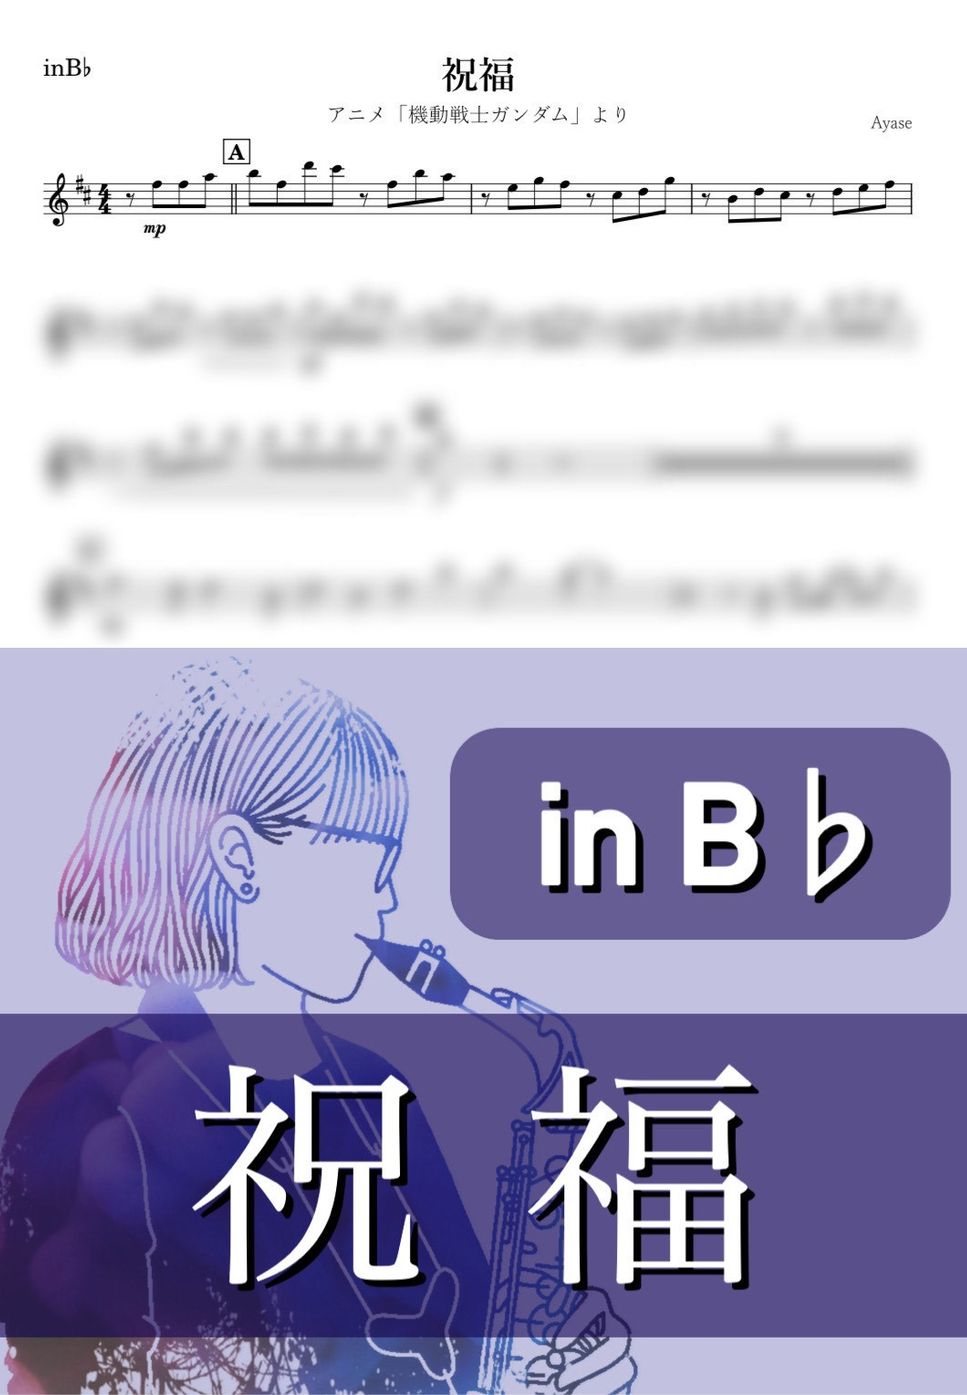 YOASOBI - 祝福 (B♭) by kanamusic